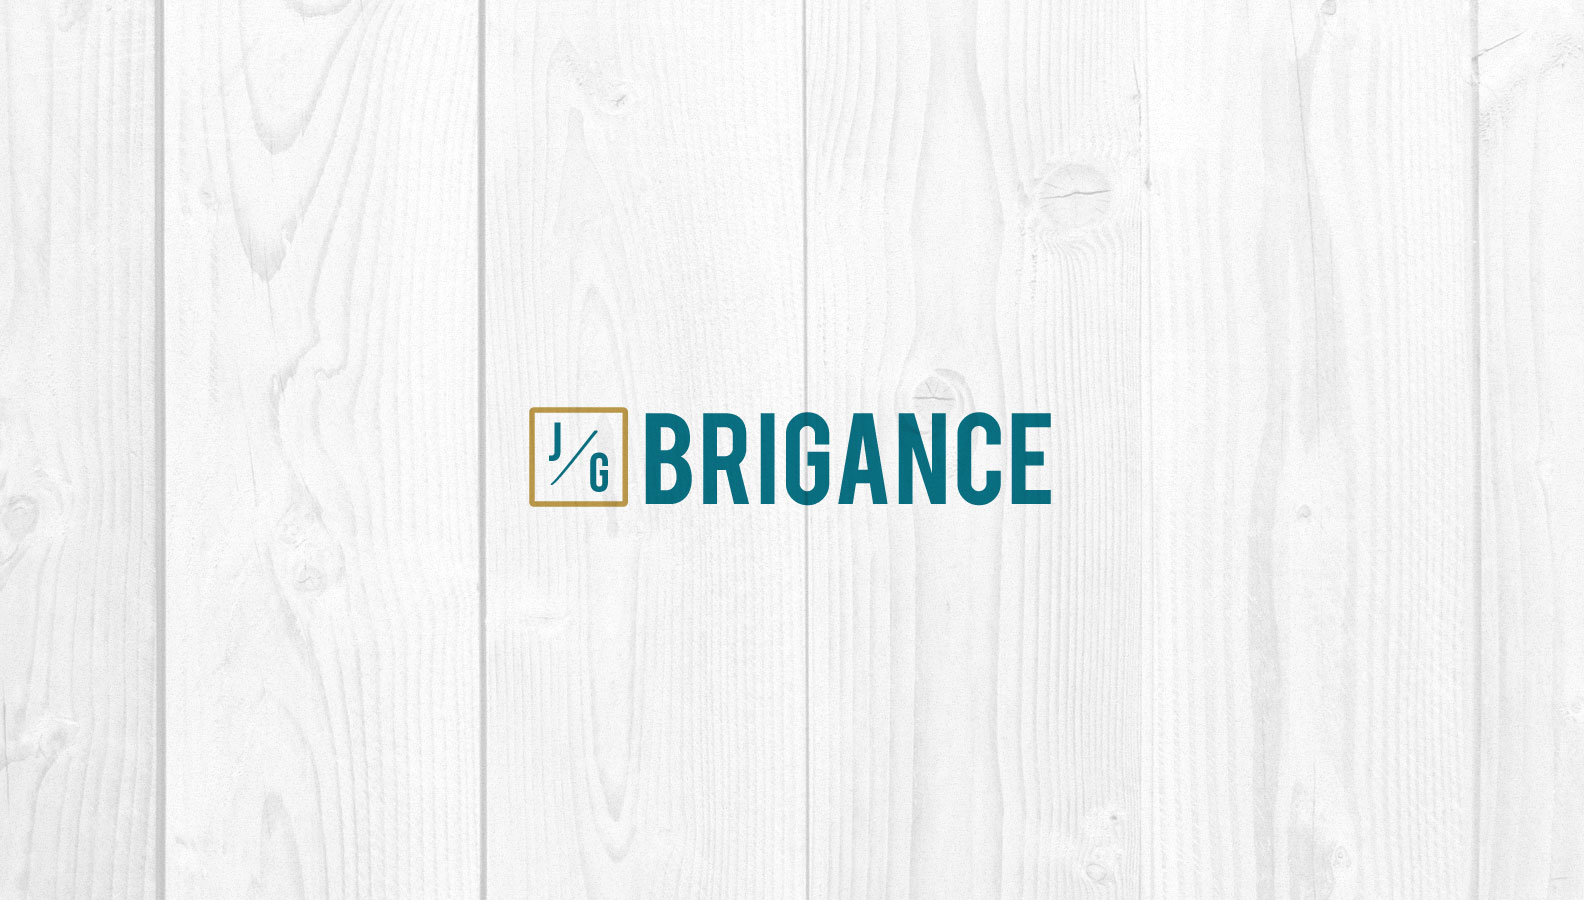 JG Brigance BBQ Sauce: Logo